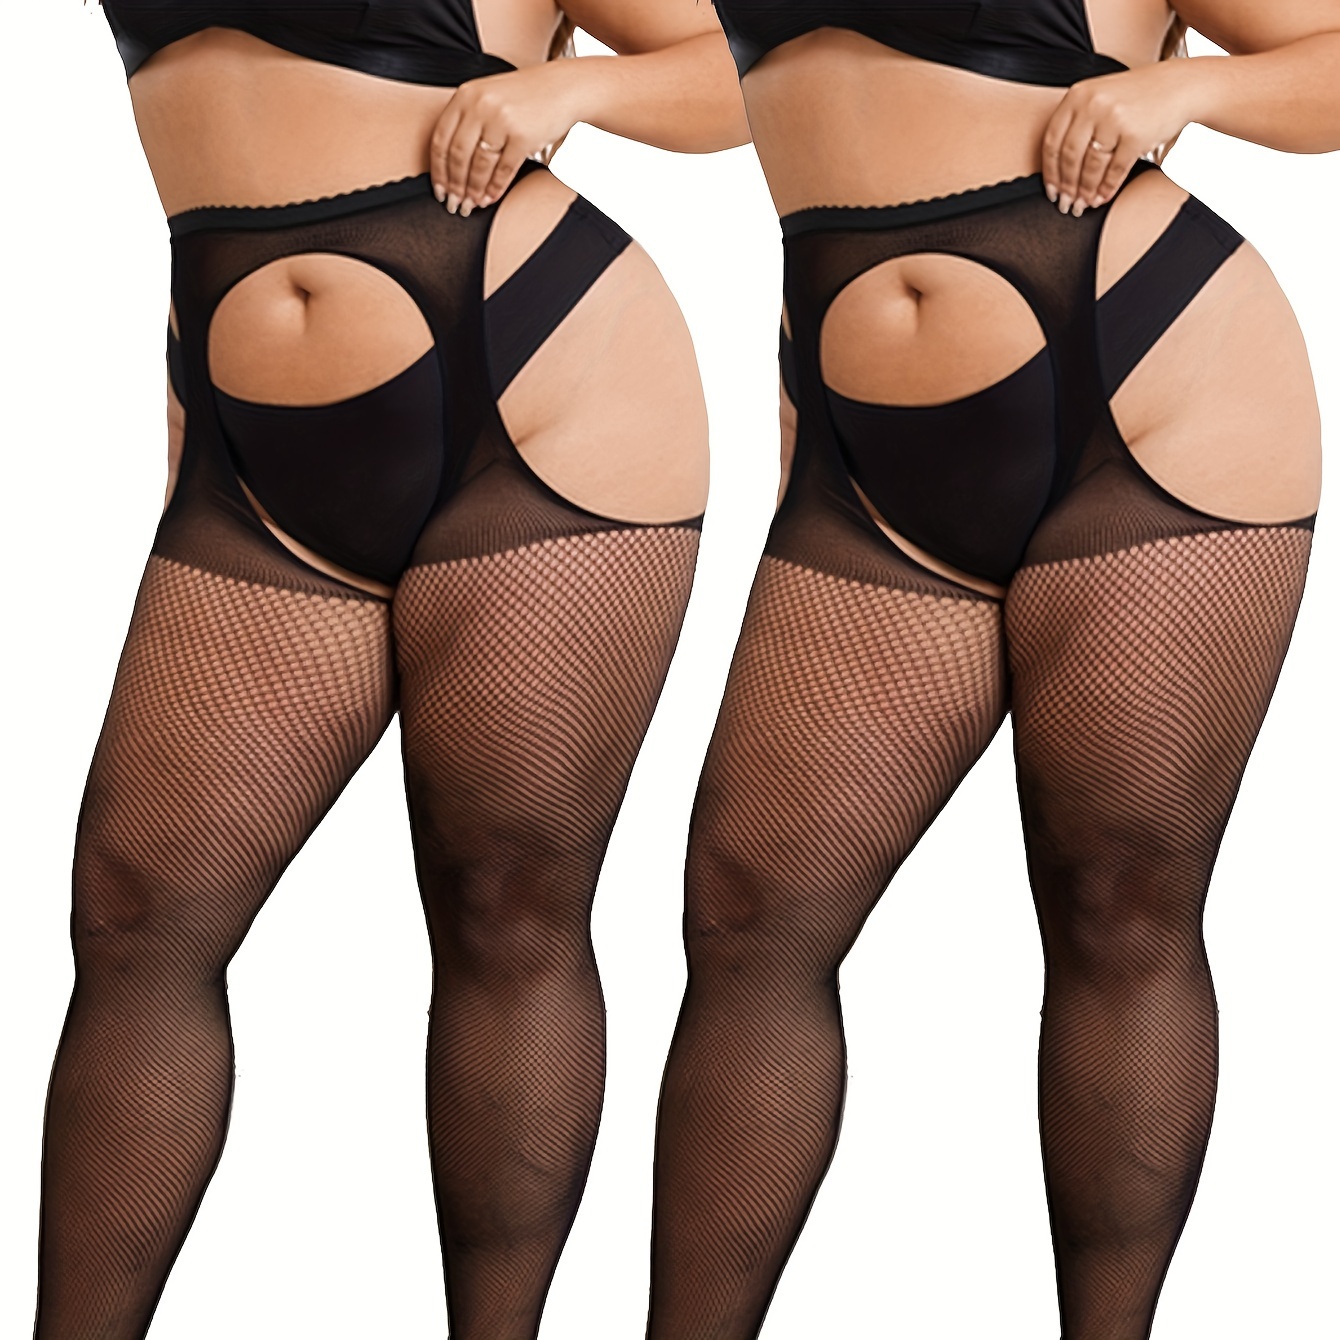 Plus Size Fishnet Stockings, Black Fishnet Tights Thigh High Stockings  Suspender Pantyhose